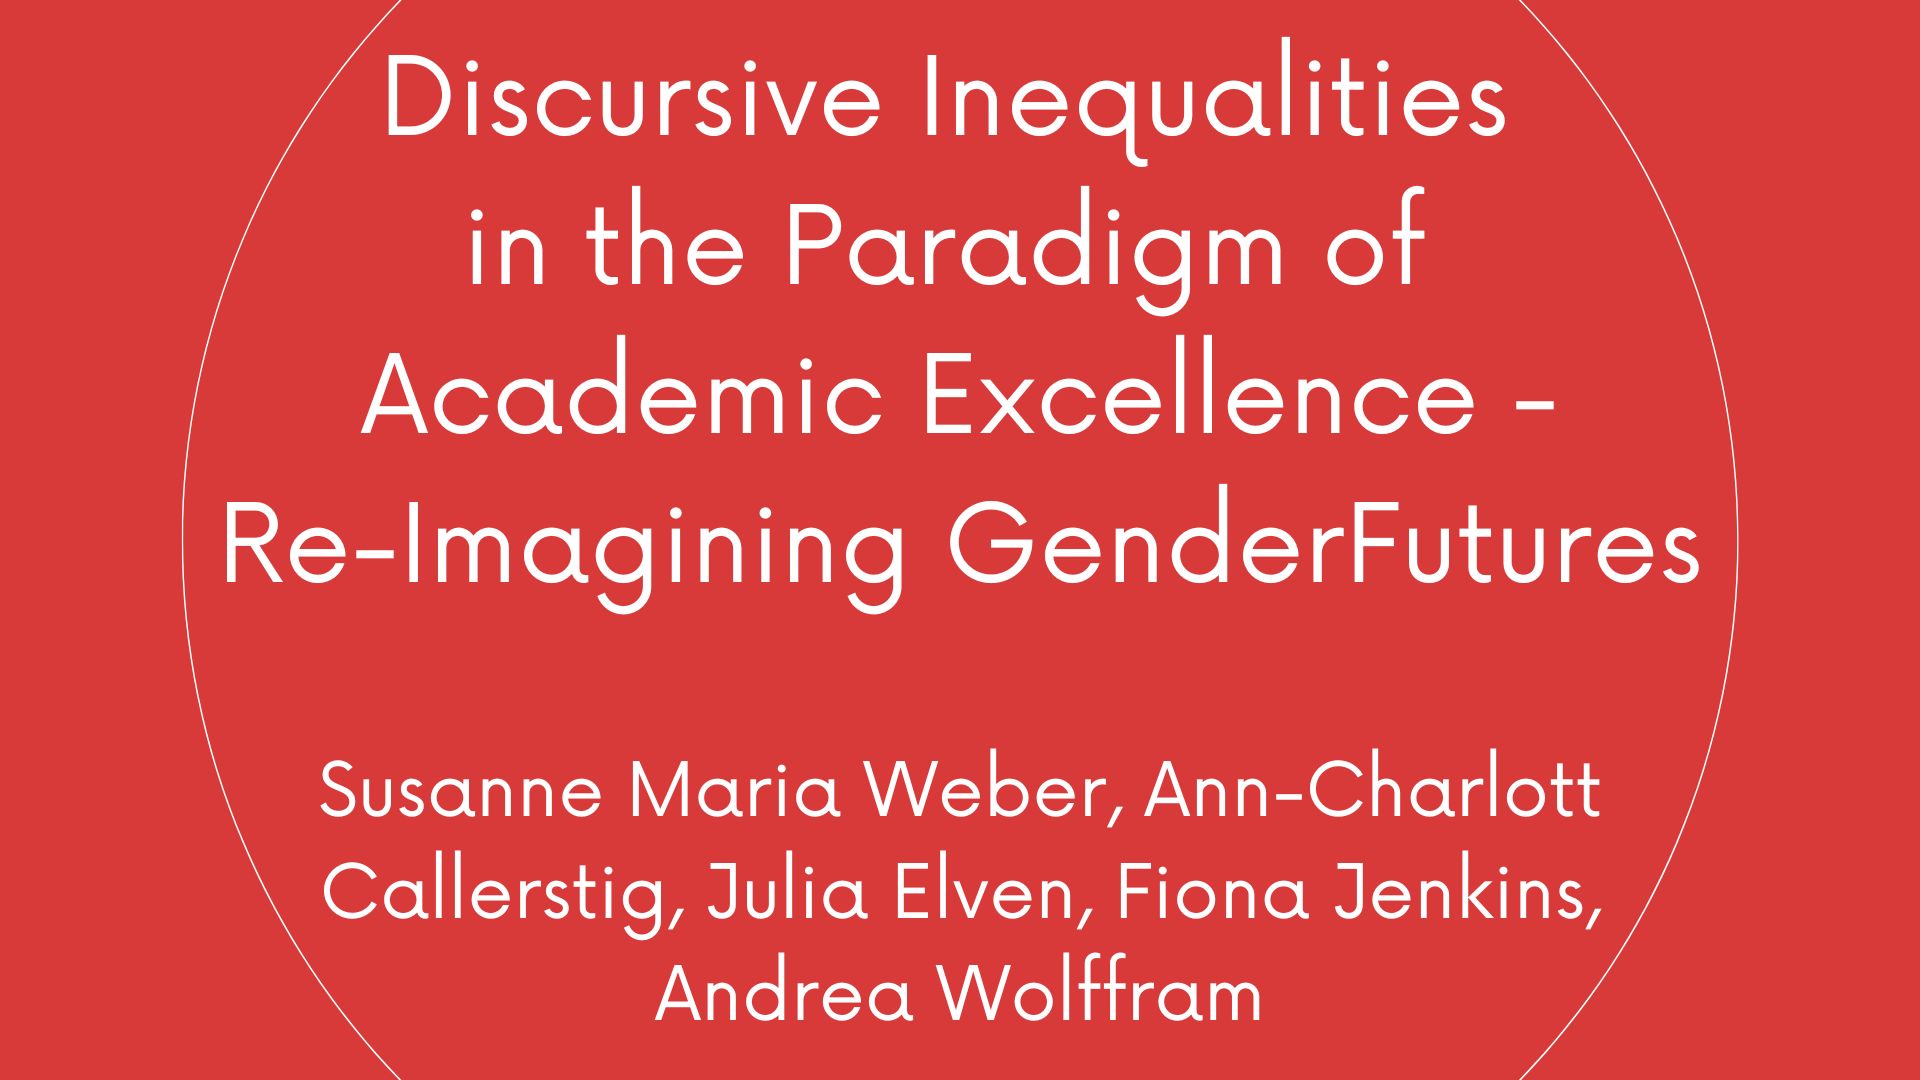 Discursive Inequalities in the Paradigm of Academic Excellence - Re-Imagining GenderFutures